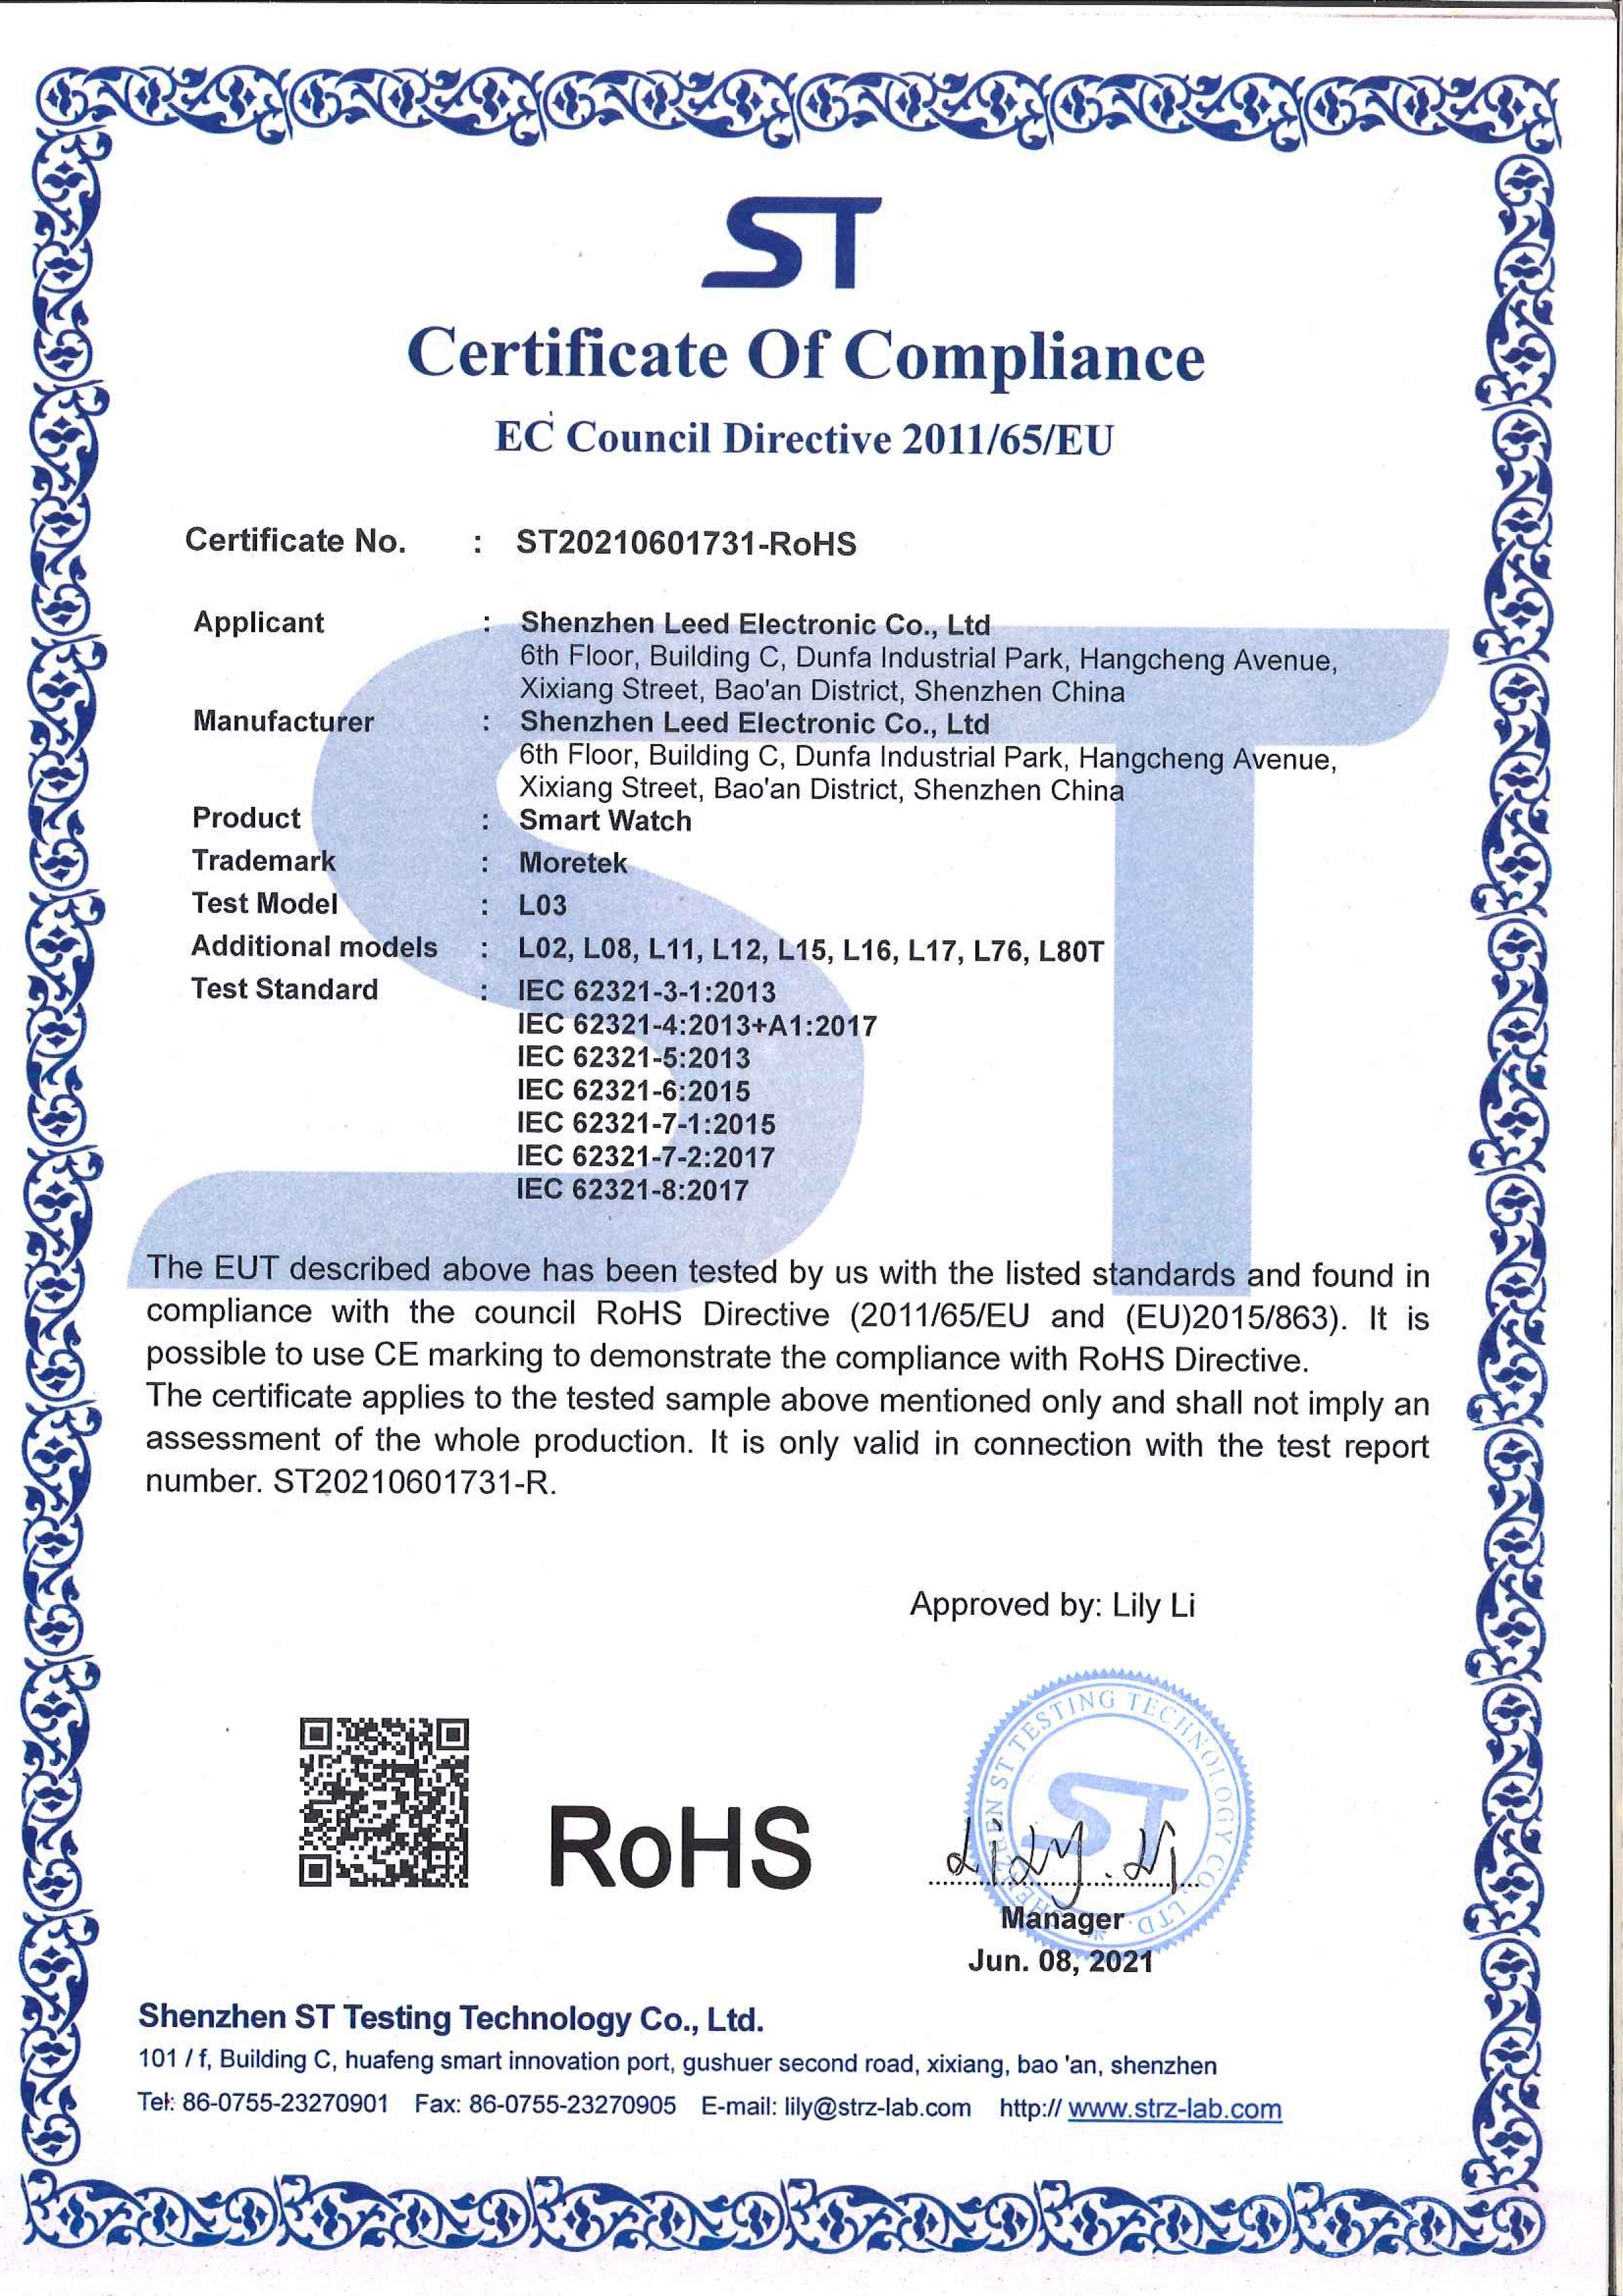 Shenzhen Leed Electronic Co., Ltd Certifications